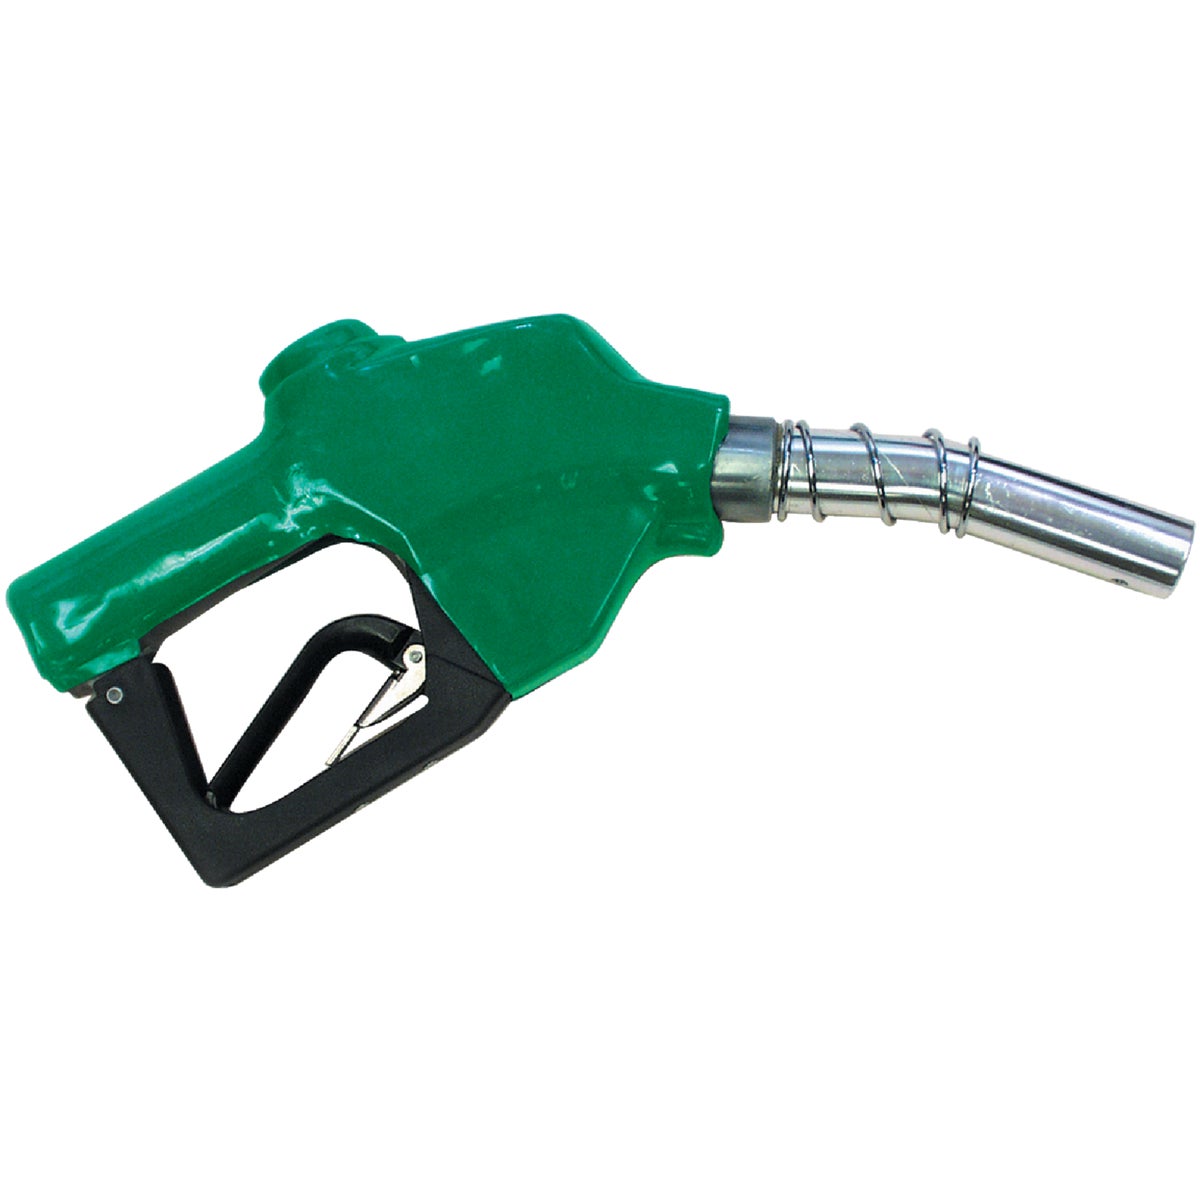 Apache 1 In. Spout Auto Shut-Off Diesel Fuel Nozzle, Green